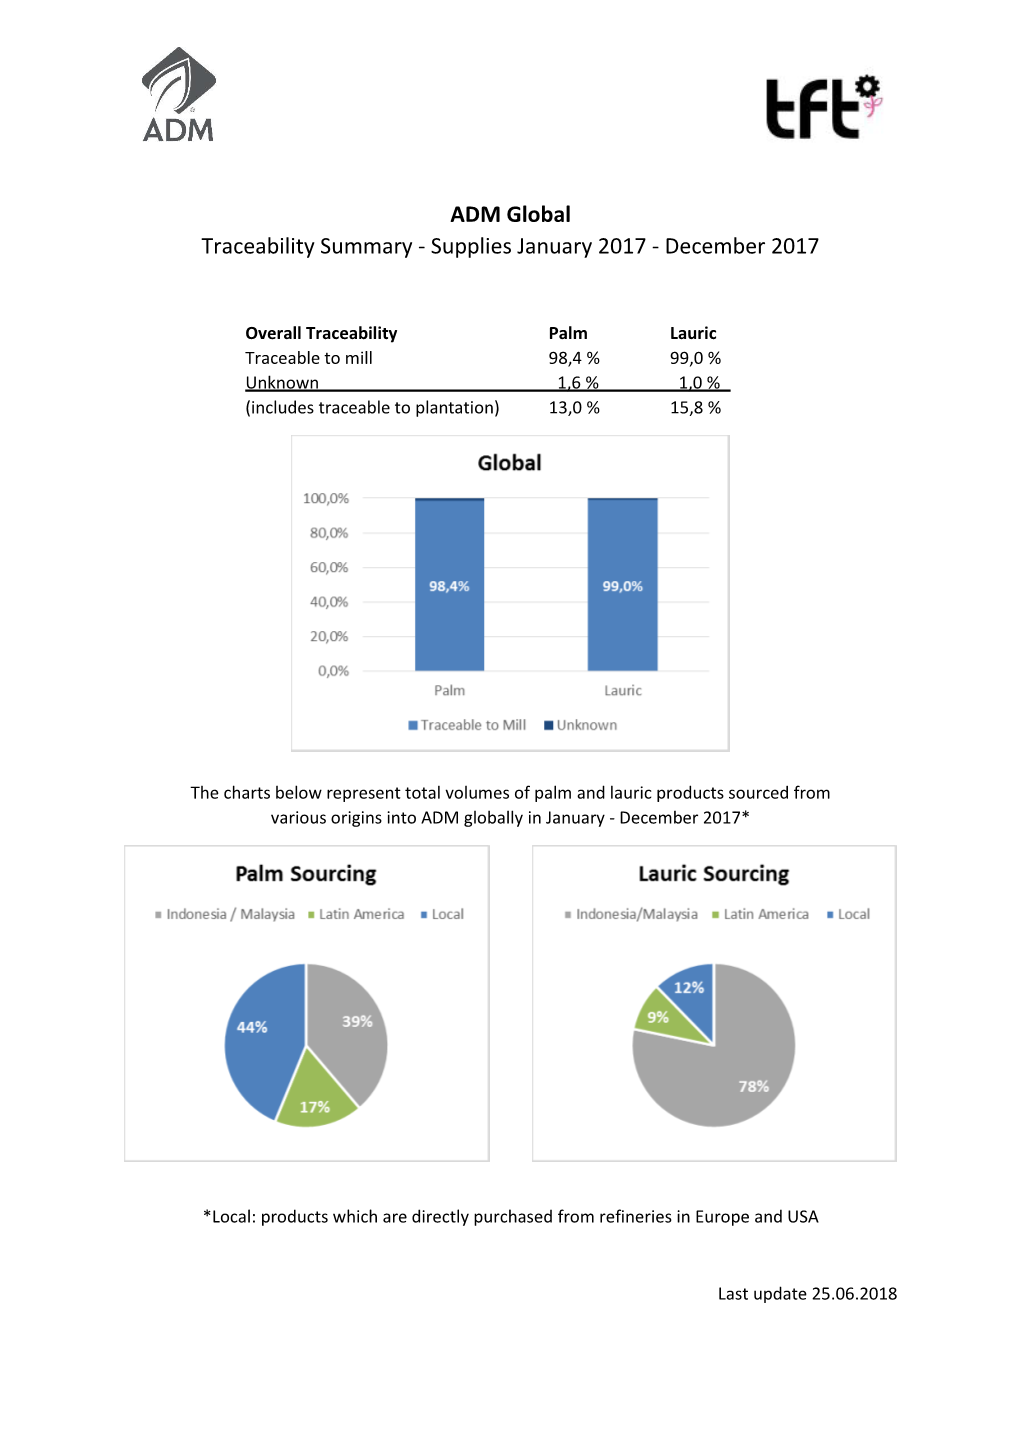 ADM Global Traceability Summary - Supplies January 2017 - December 2017